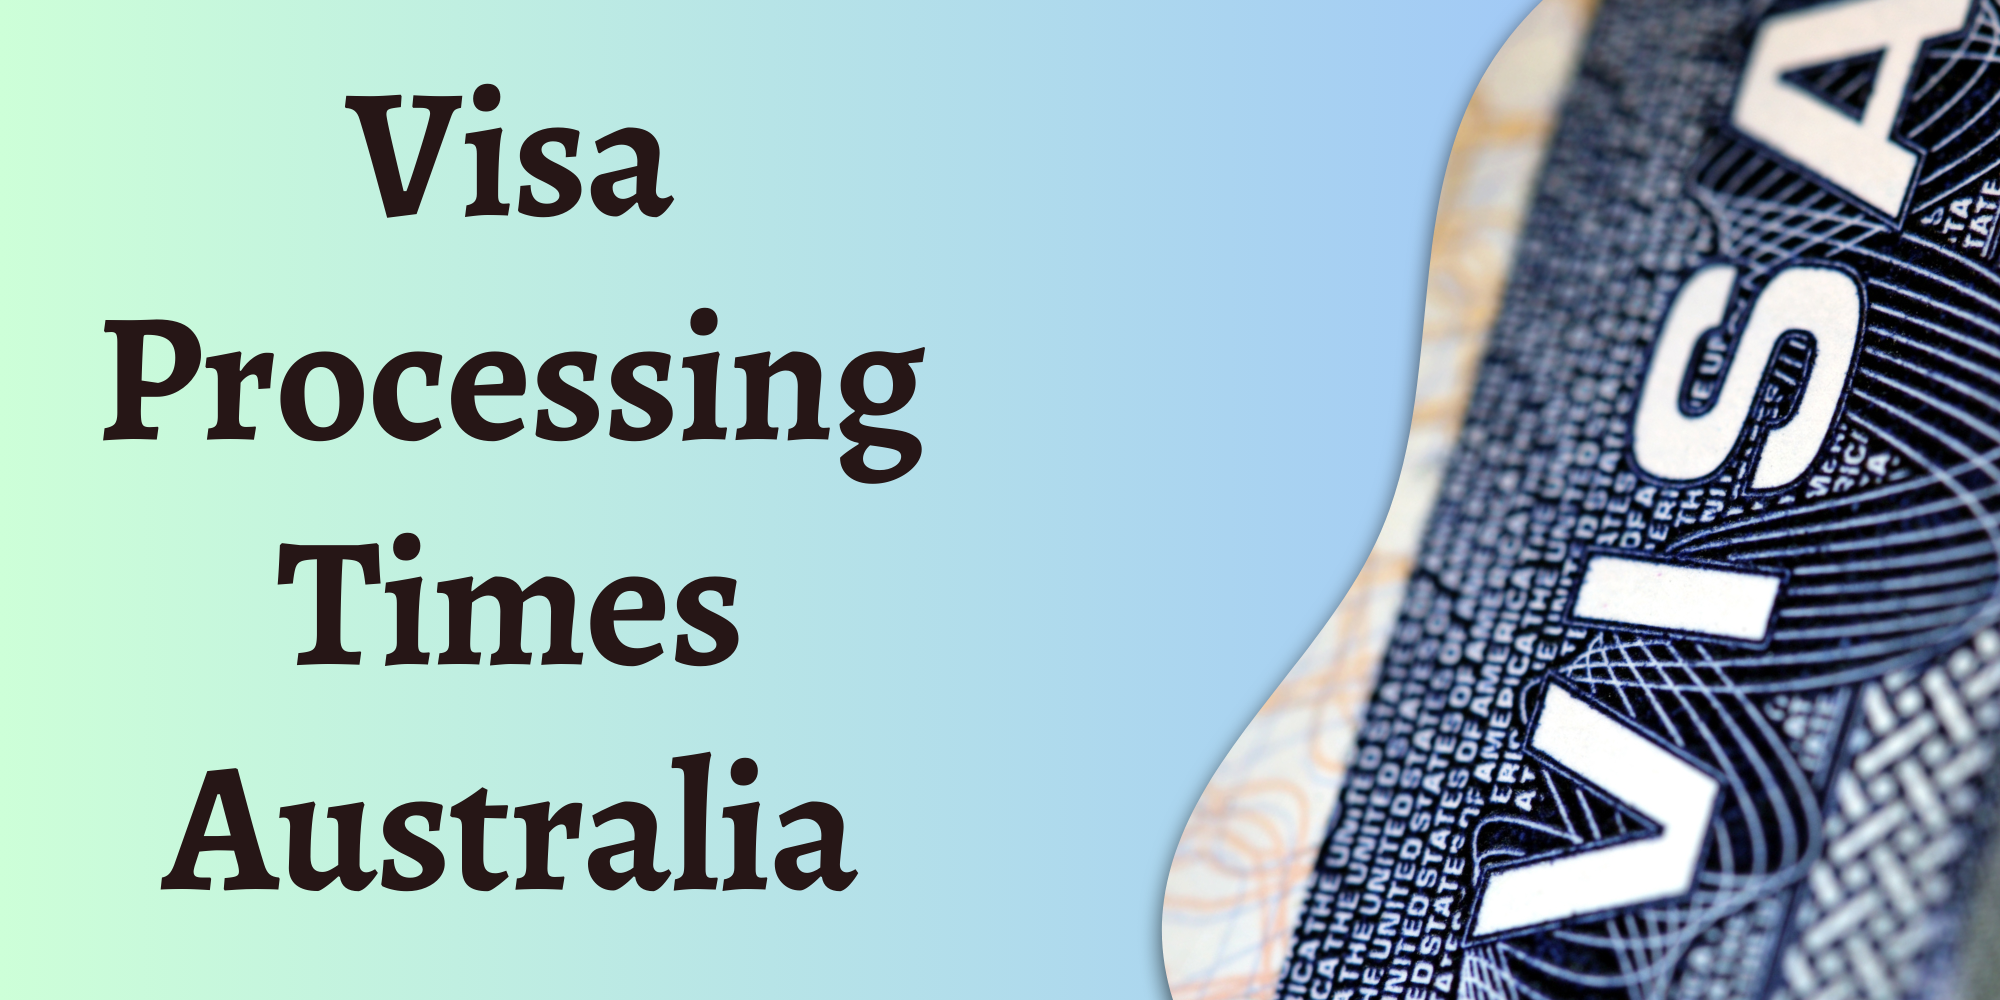 Visa-Pr_ocessing-times-Australia-2.png